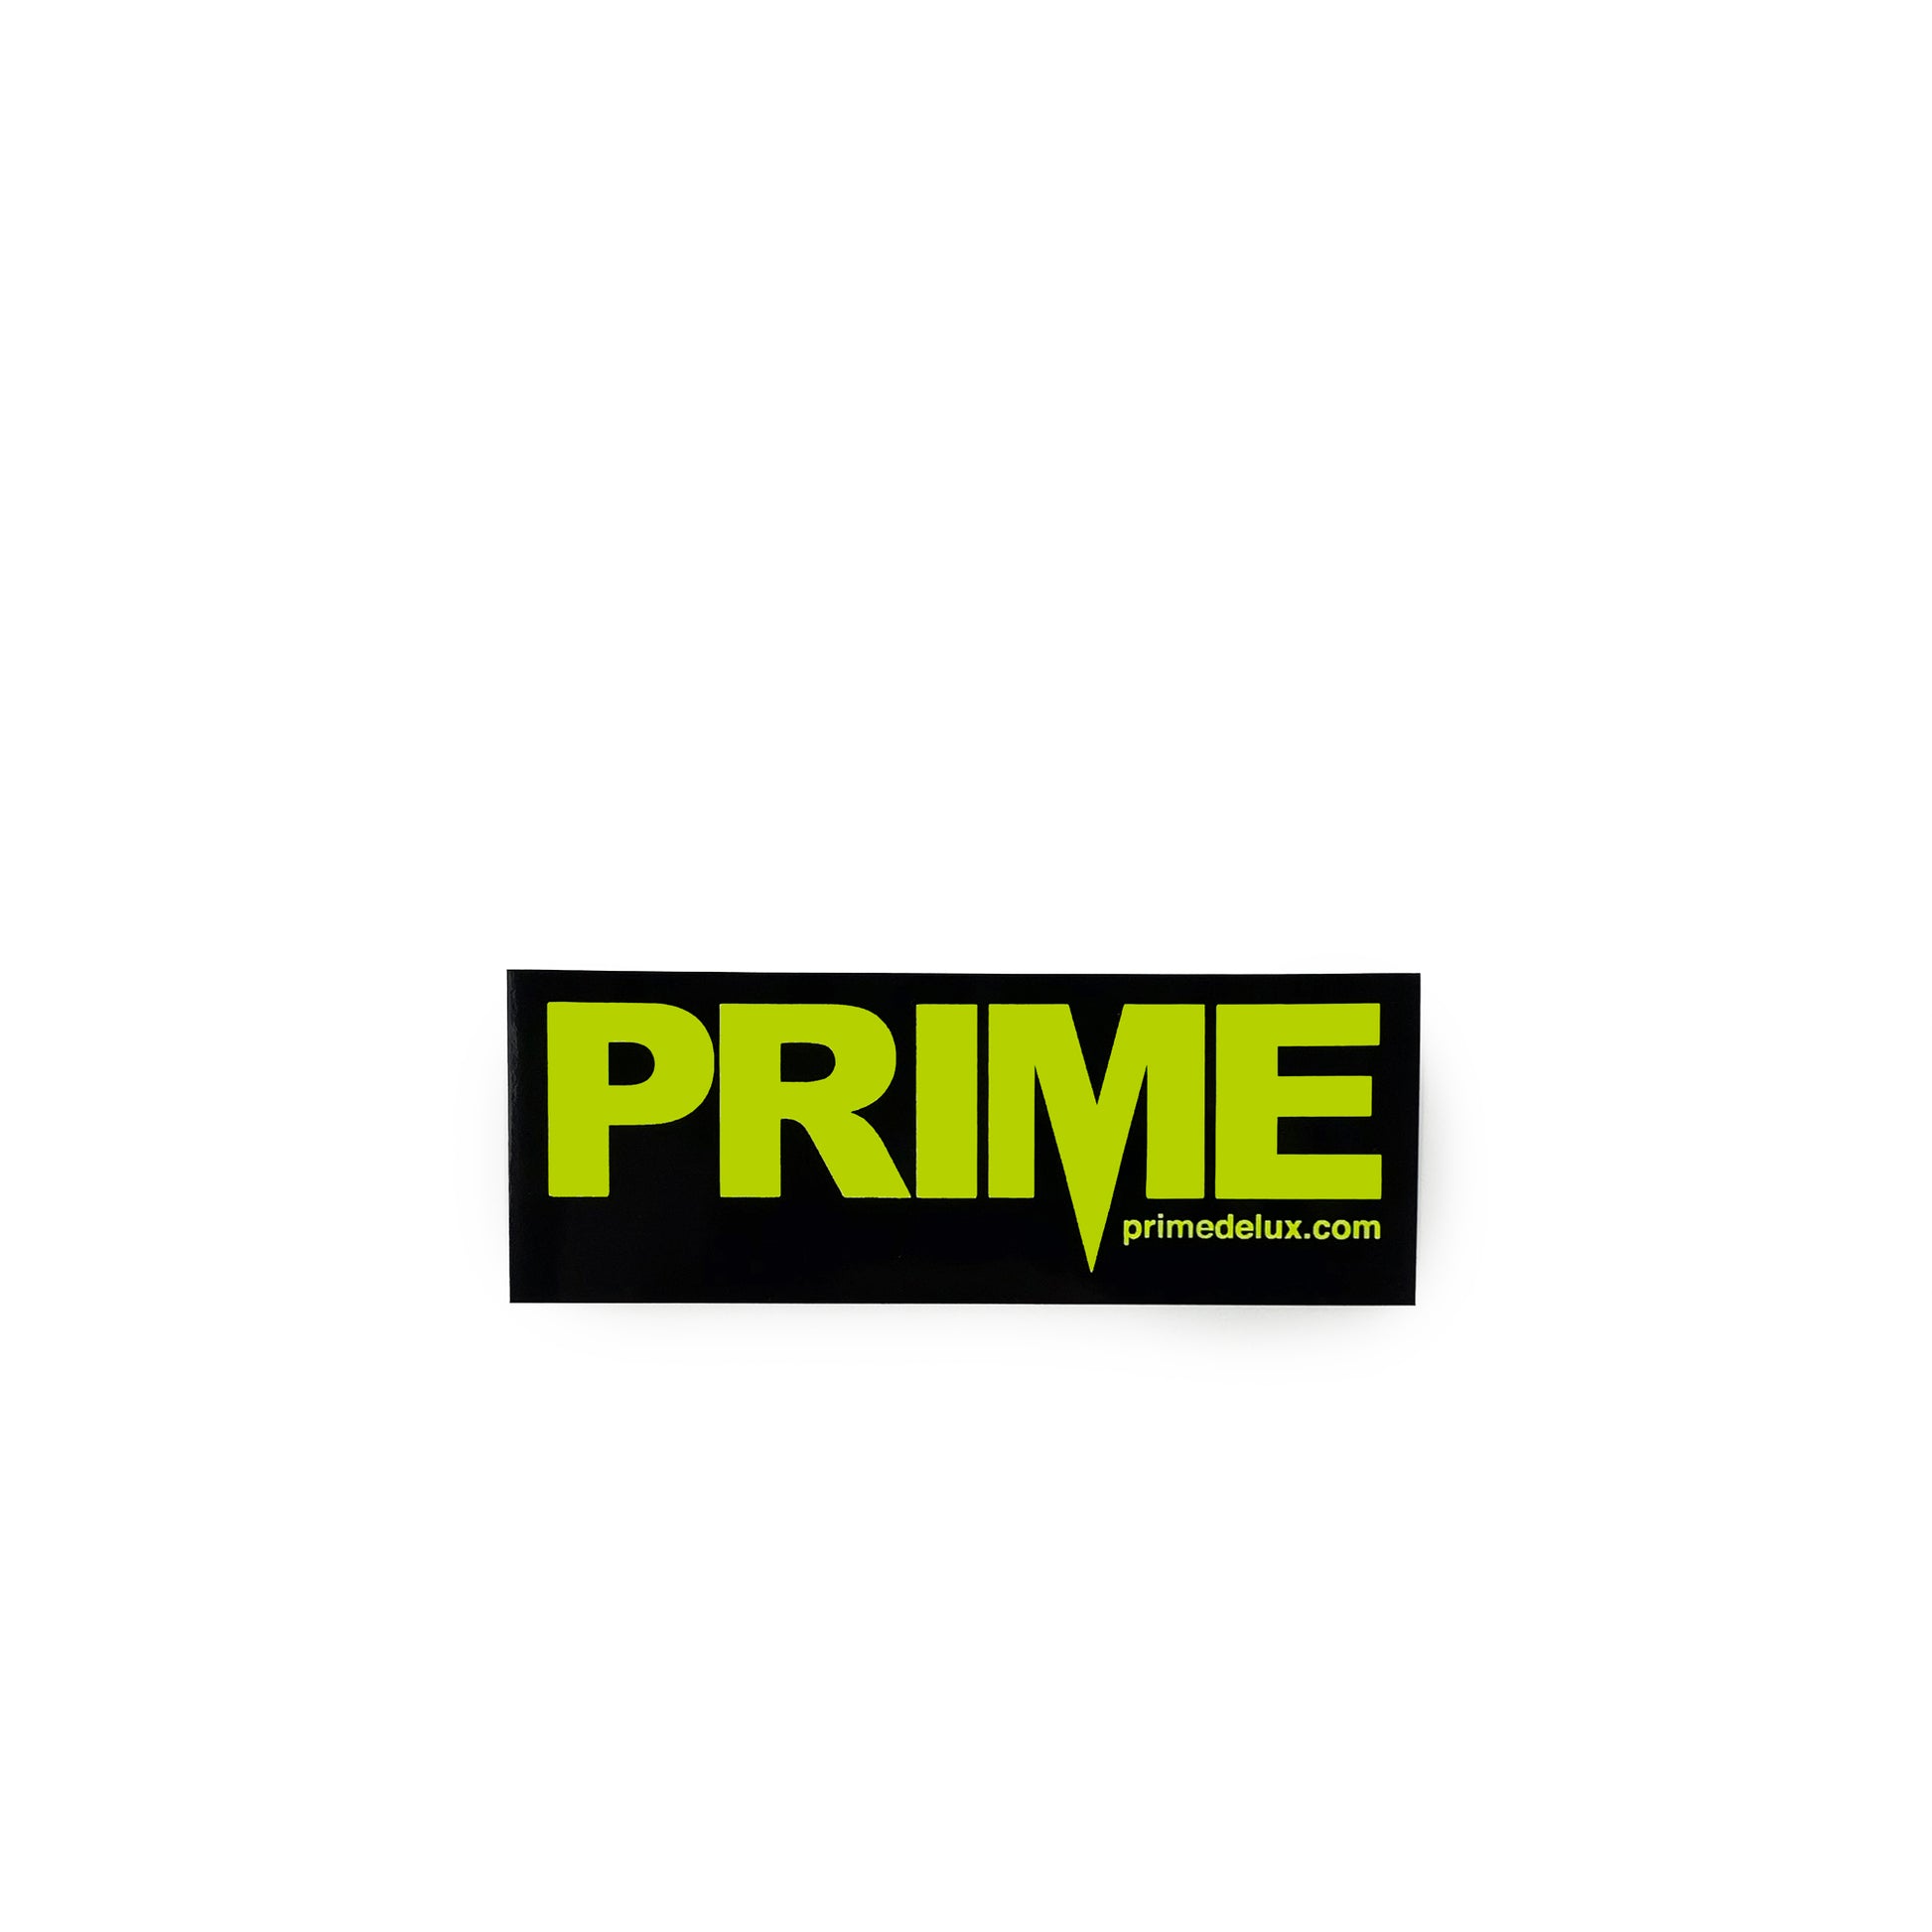 Prime Delux OG Sticker M - Neon Yellow / Black - Prime Delux Store